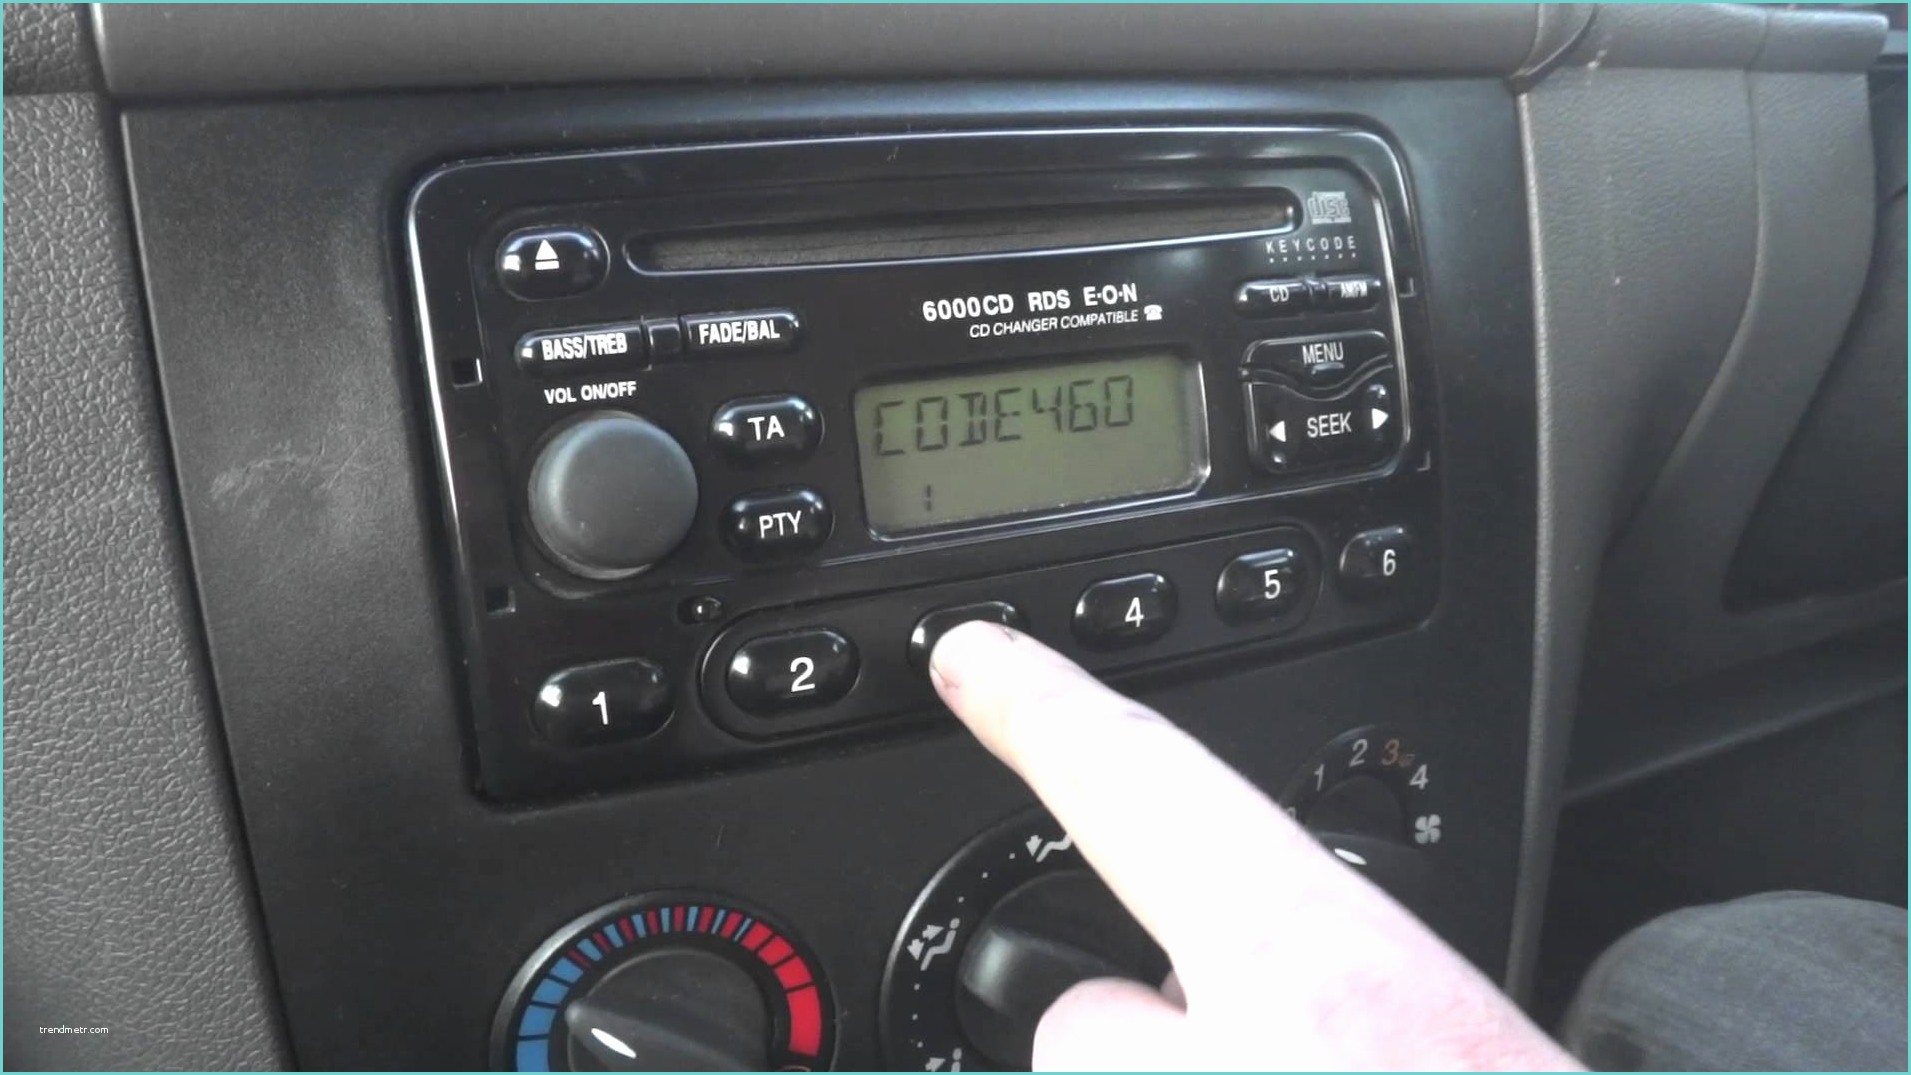 Code Autoradio ford Transit ford Transit Radio Code Generator Application Helps Line